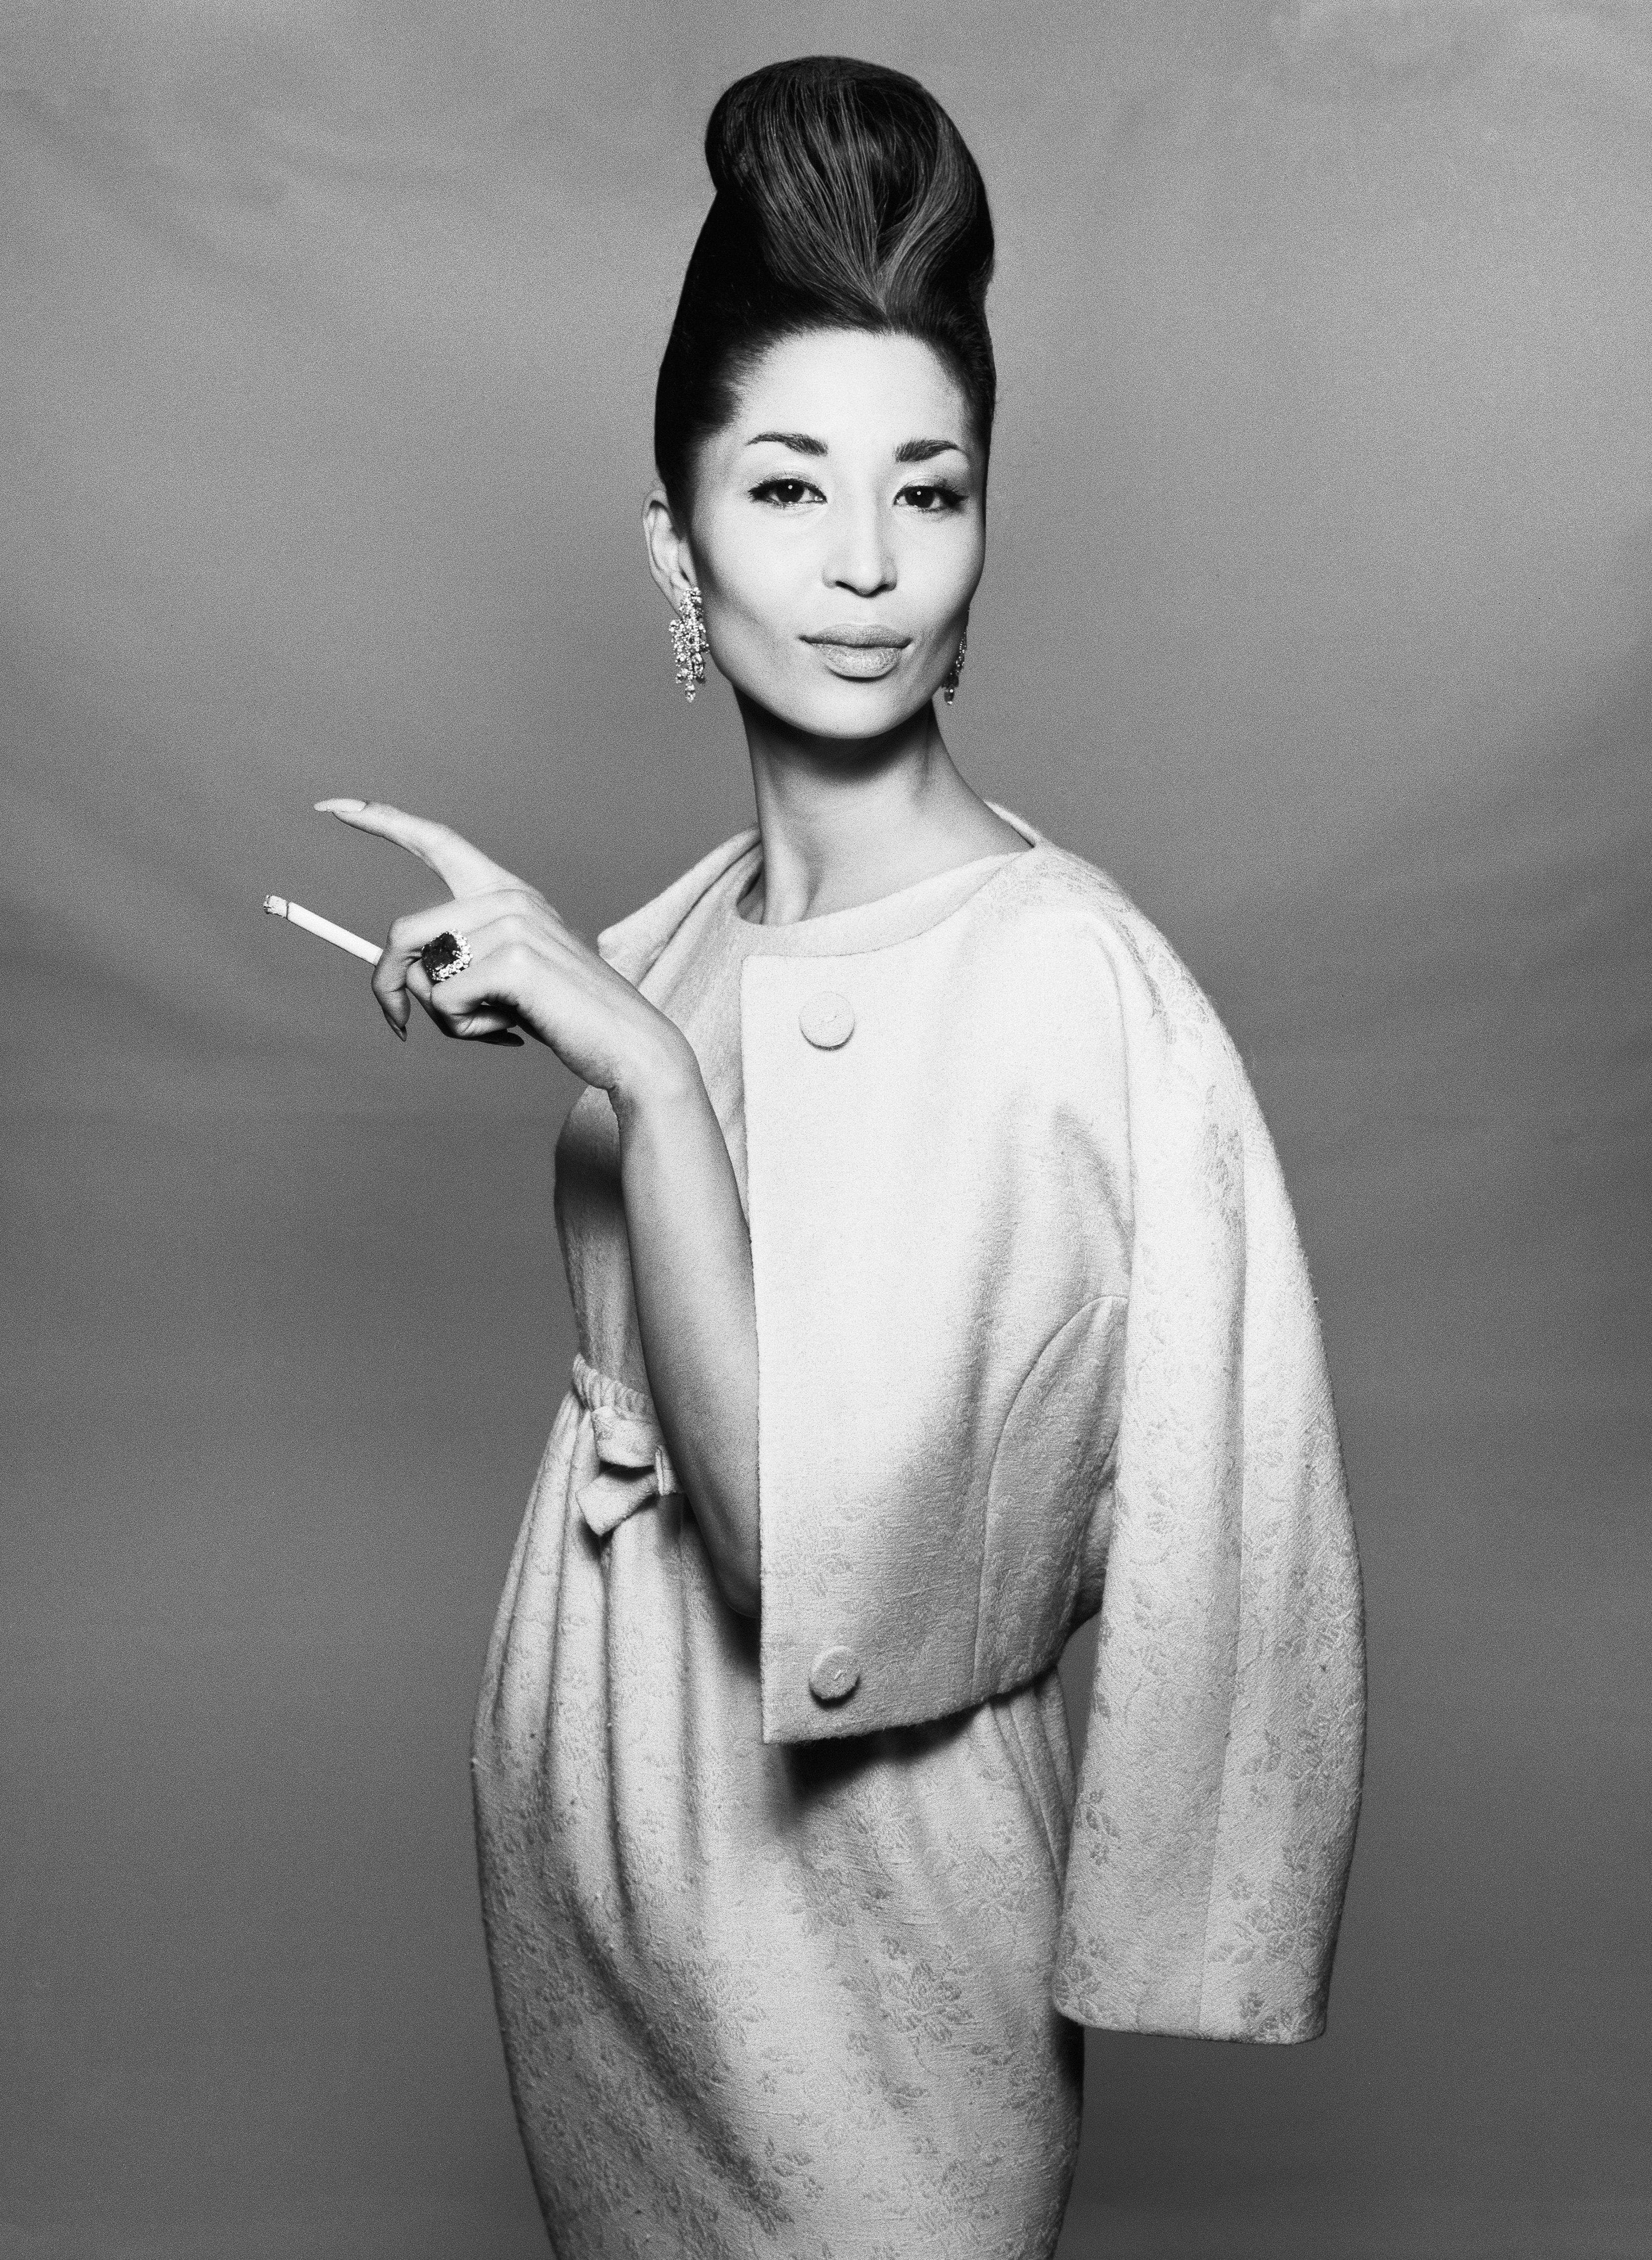 Chelsea_Gagosian China Machado, suit by Ben Zuckerman, hair by Kenneth, New York, November 6, 1958.jpg